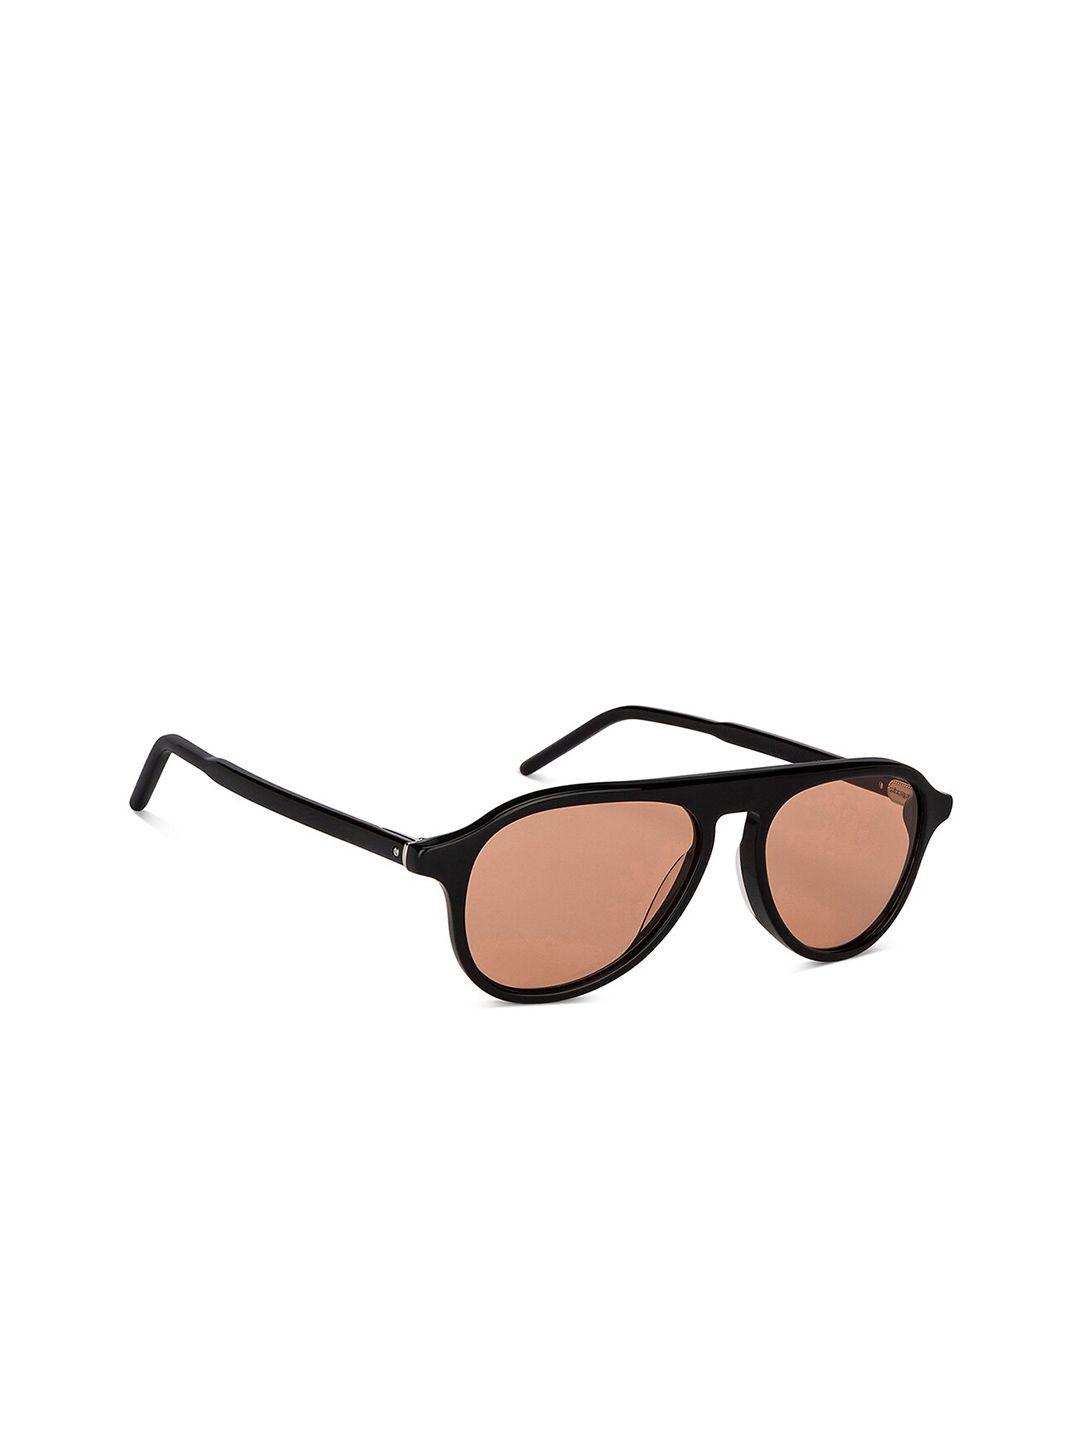 john-jacobs-full-rim-square-sunglasses-with-uv-protected-lens-148206